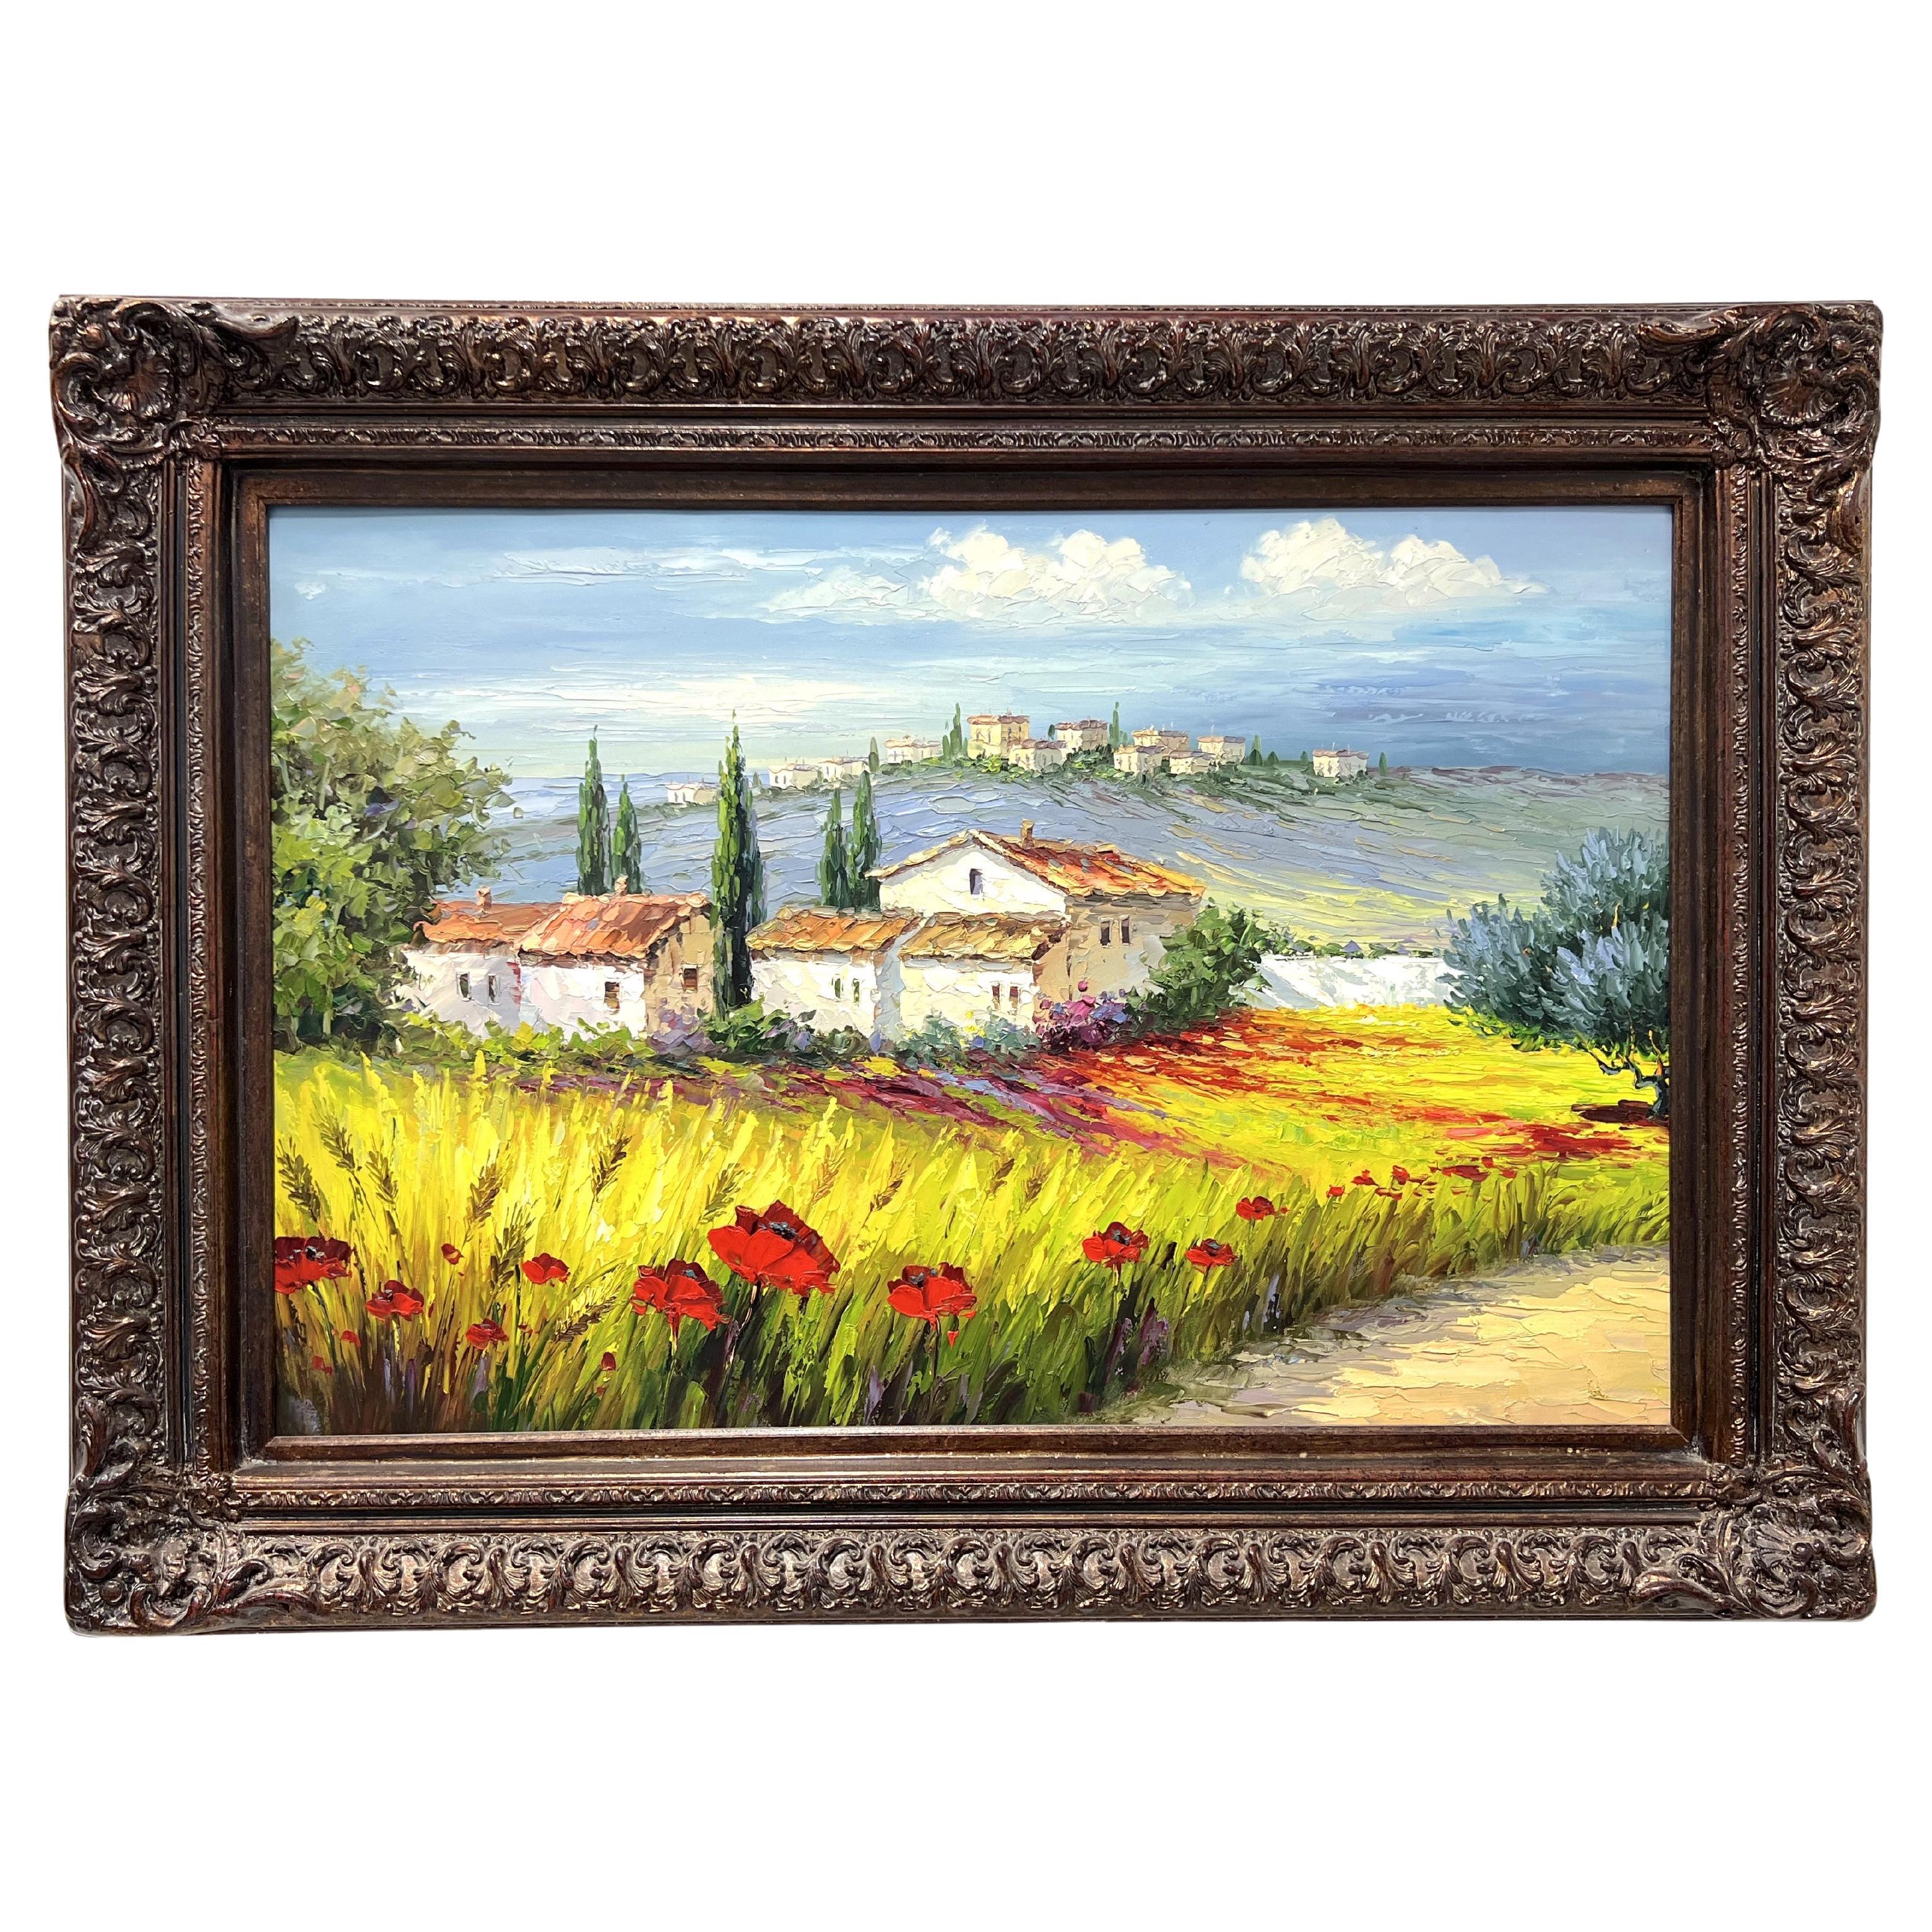 20th Century Original Oil Impasto on Canvas Painting - European Countryside